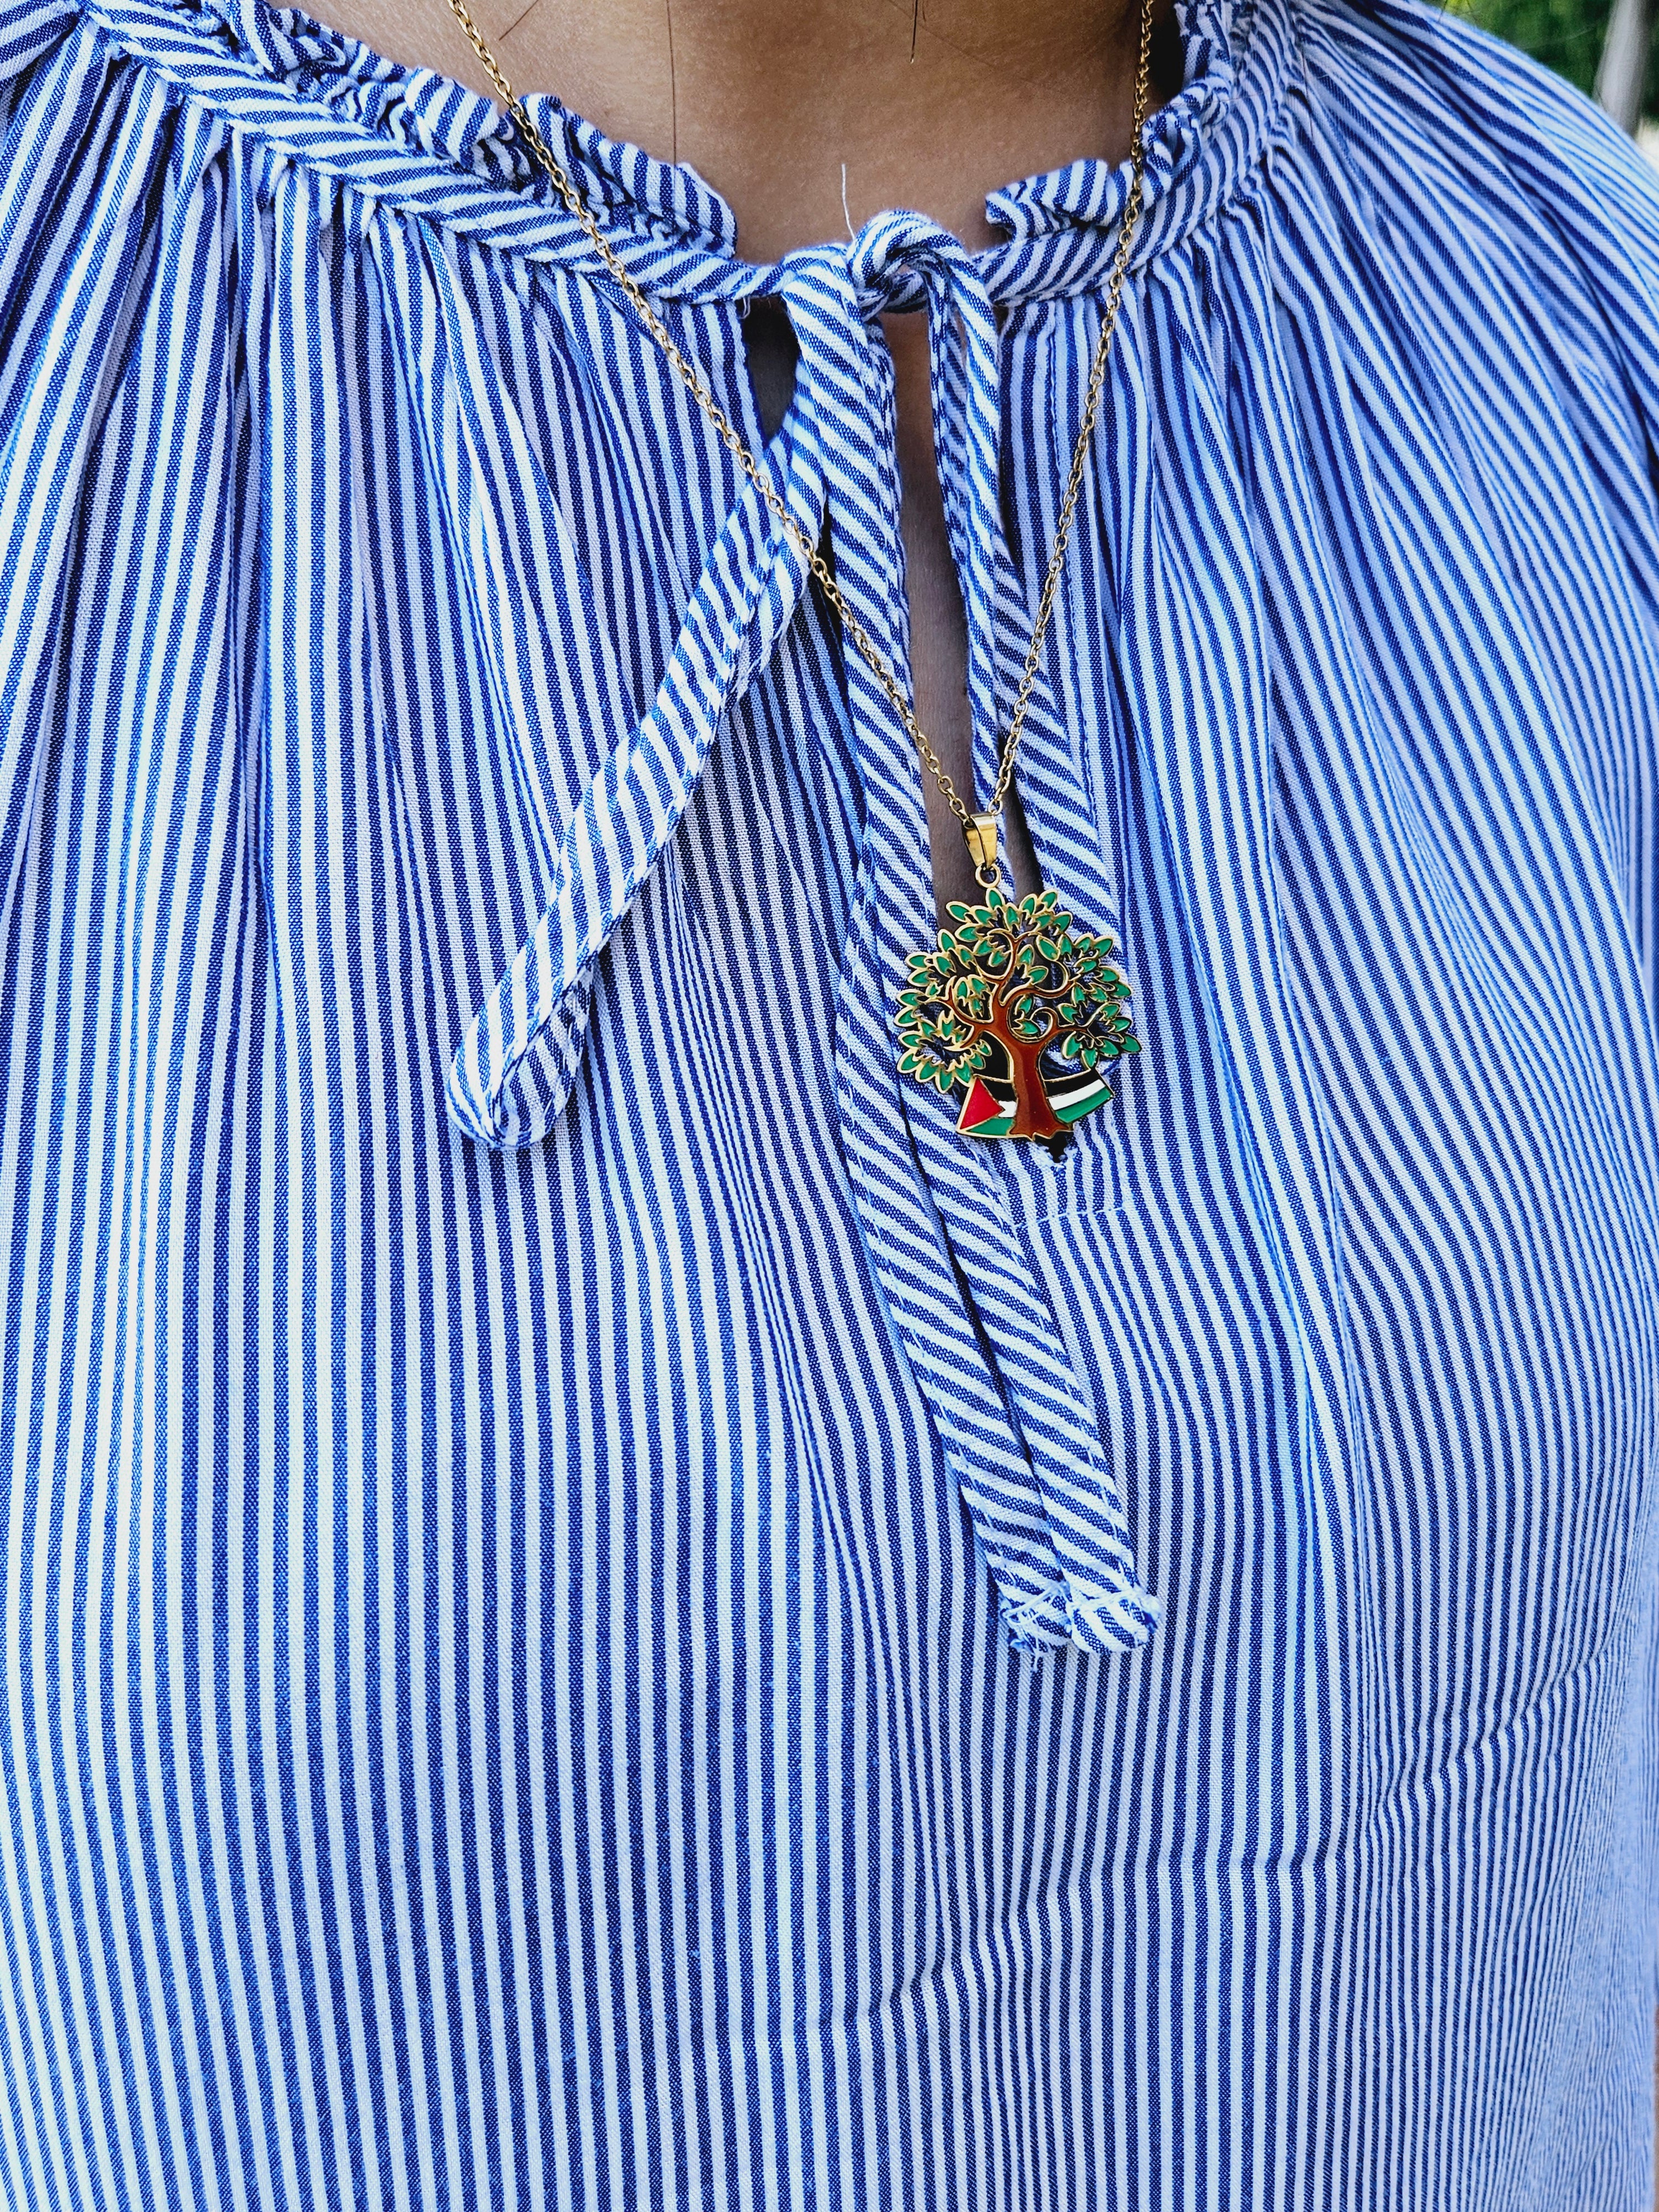 Palestine Olive Tree Necklace